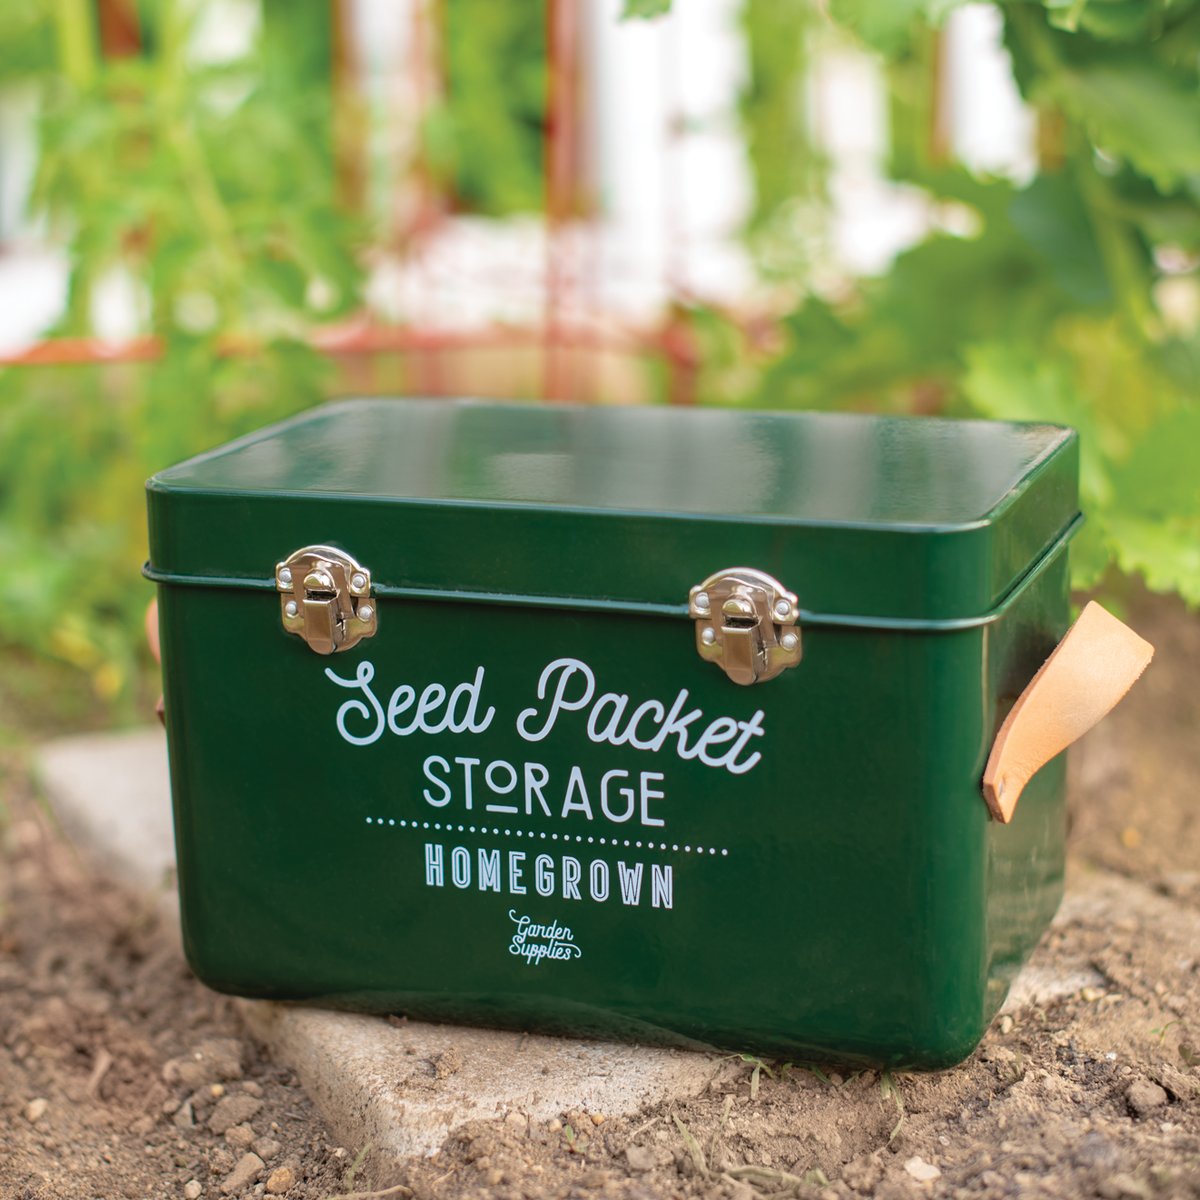 Gardener's Edge on X: This beautifully-designed storage tin is